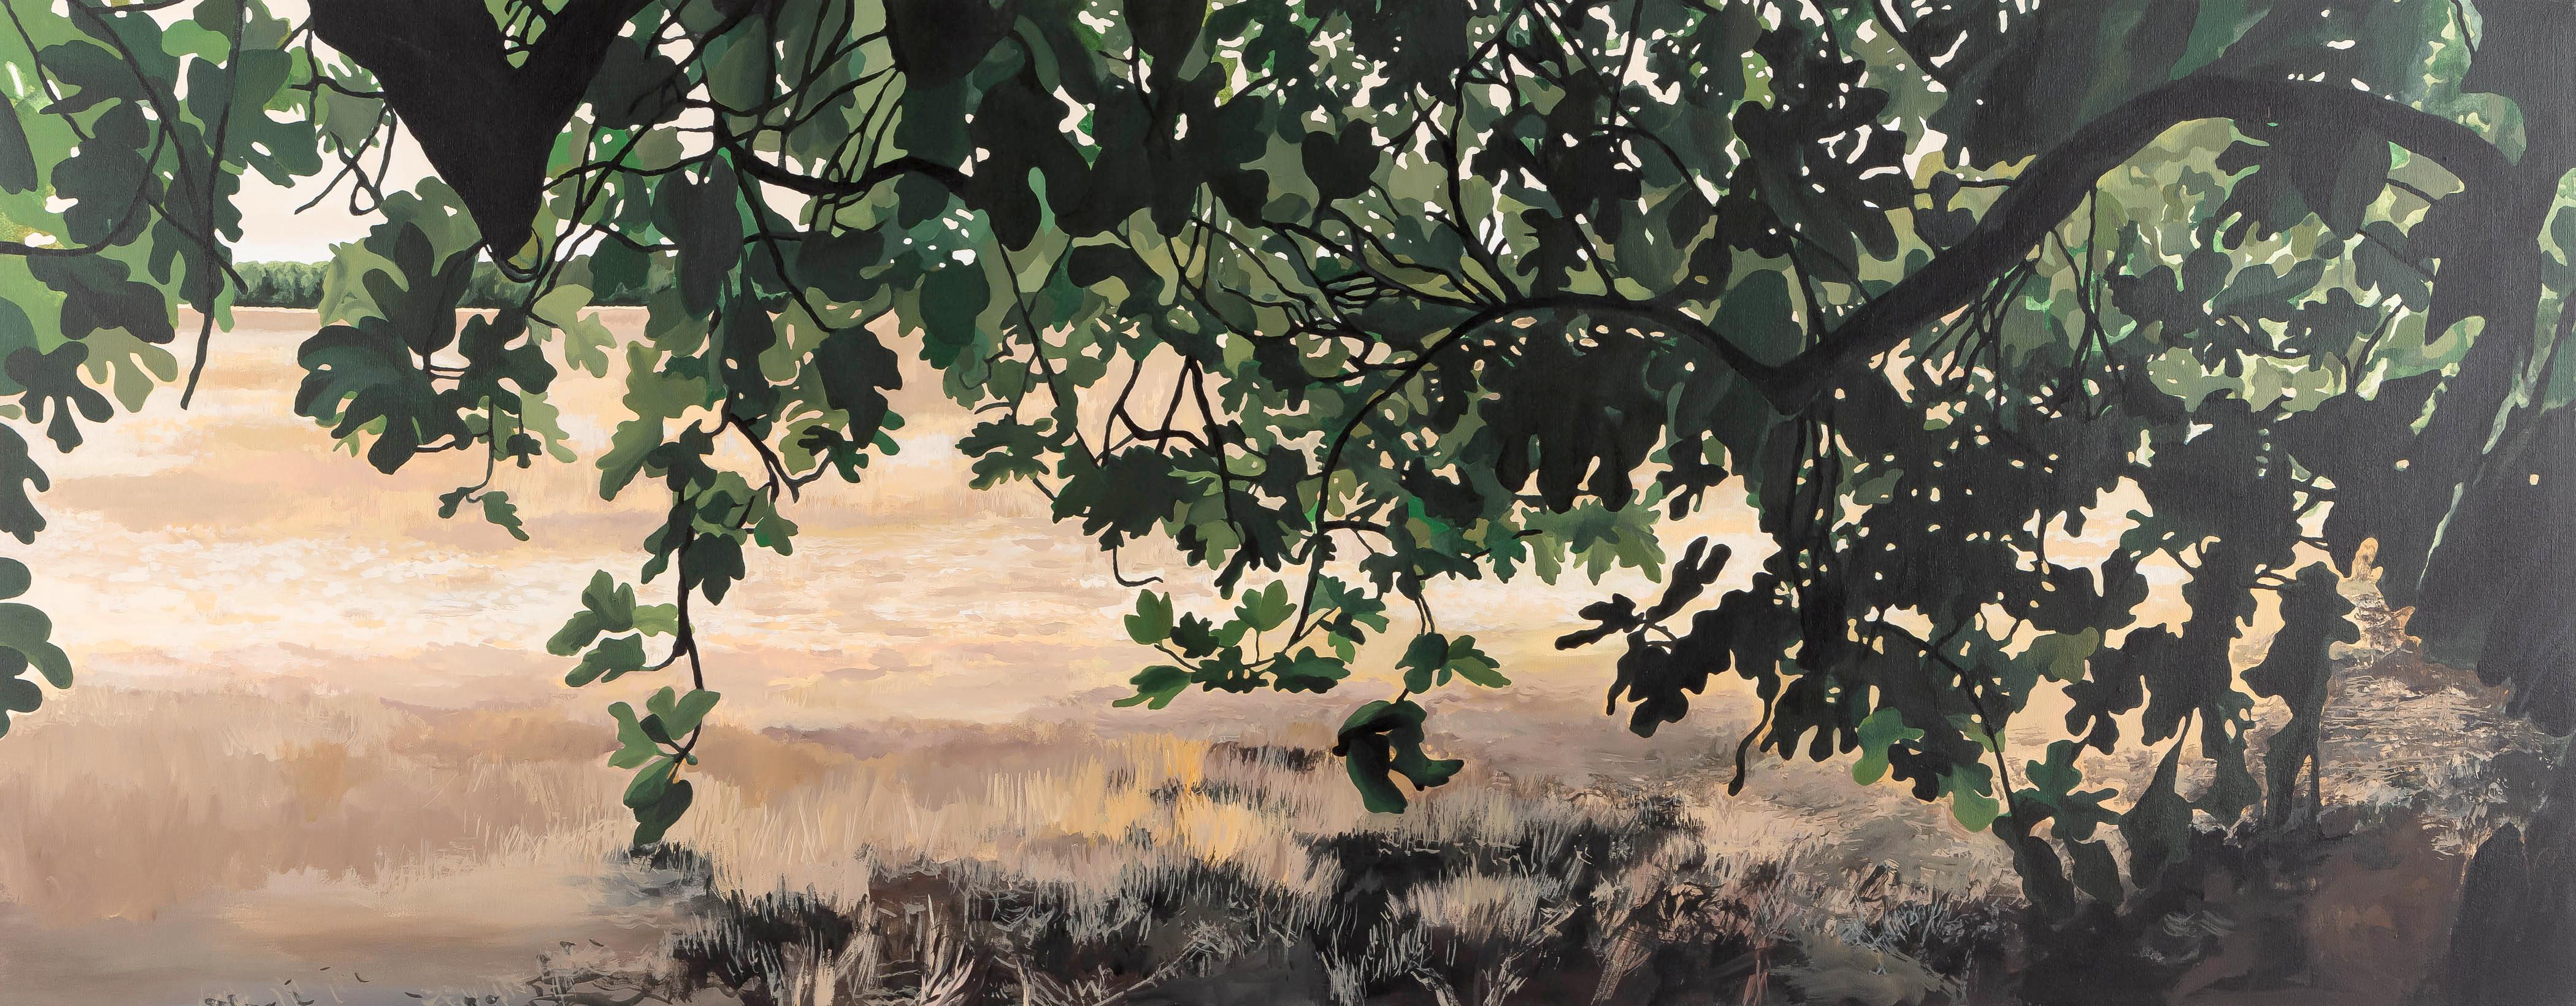 Jeffrey Long Landscape Painting - Under the Fig Tree